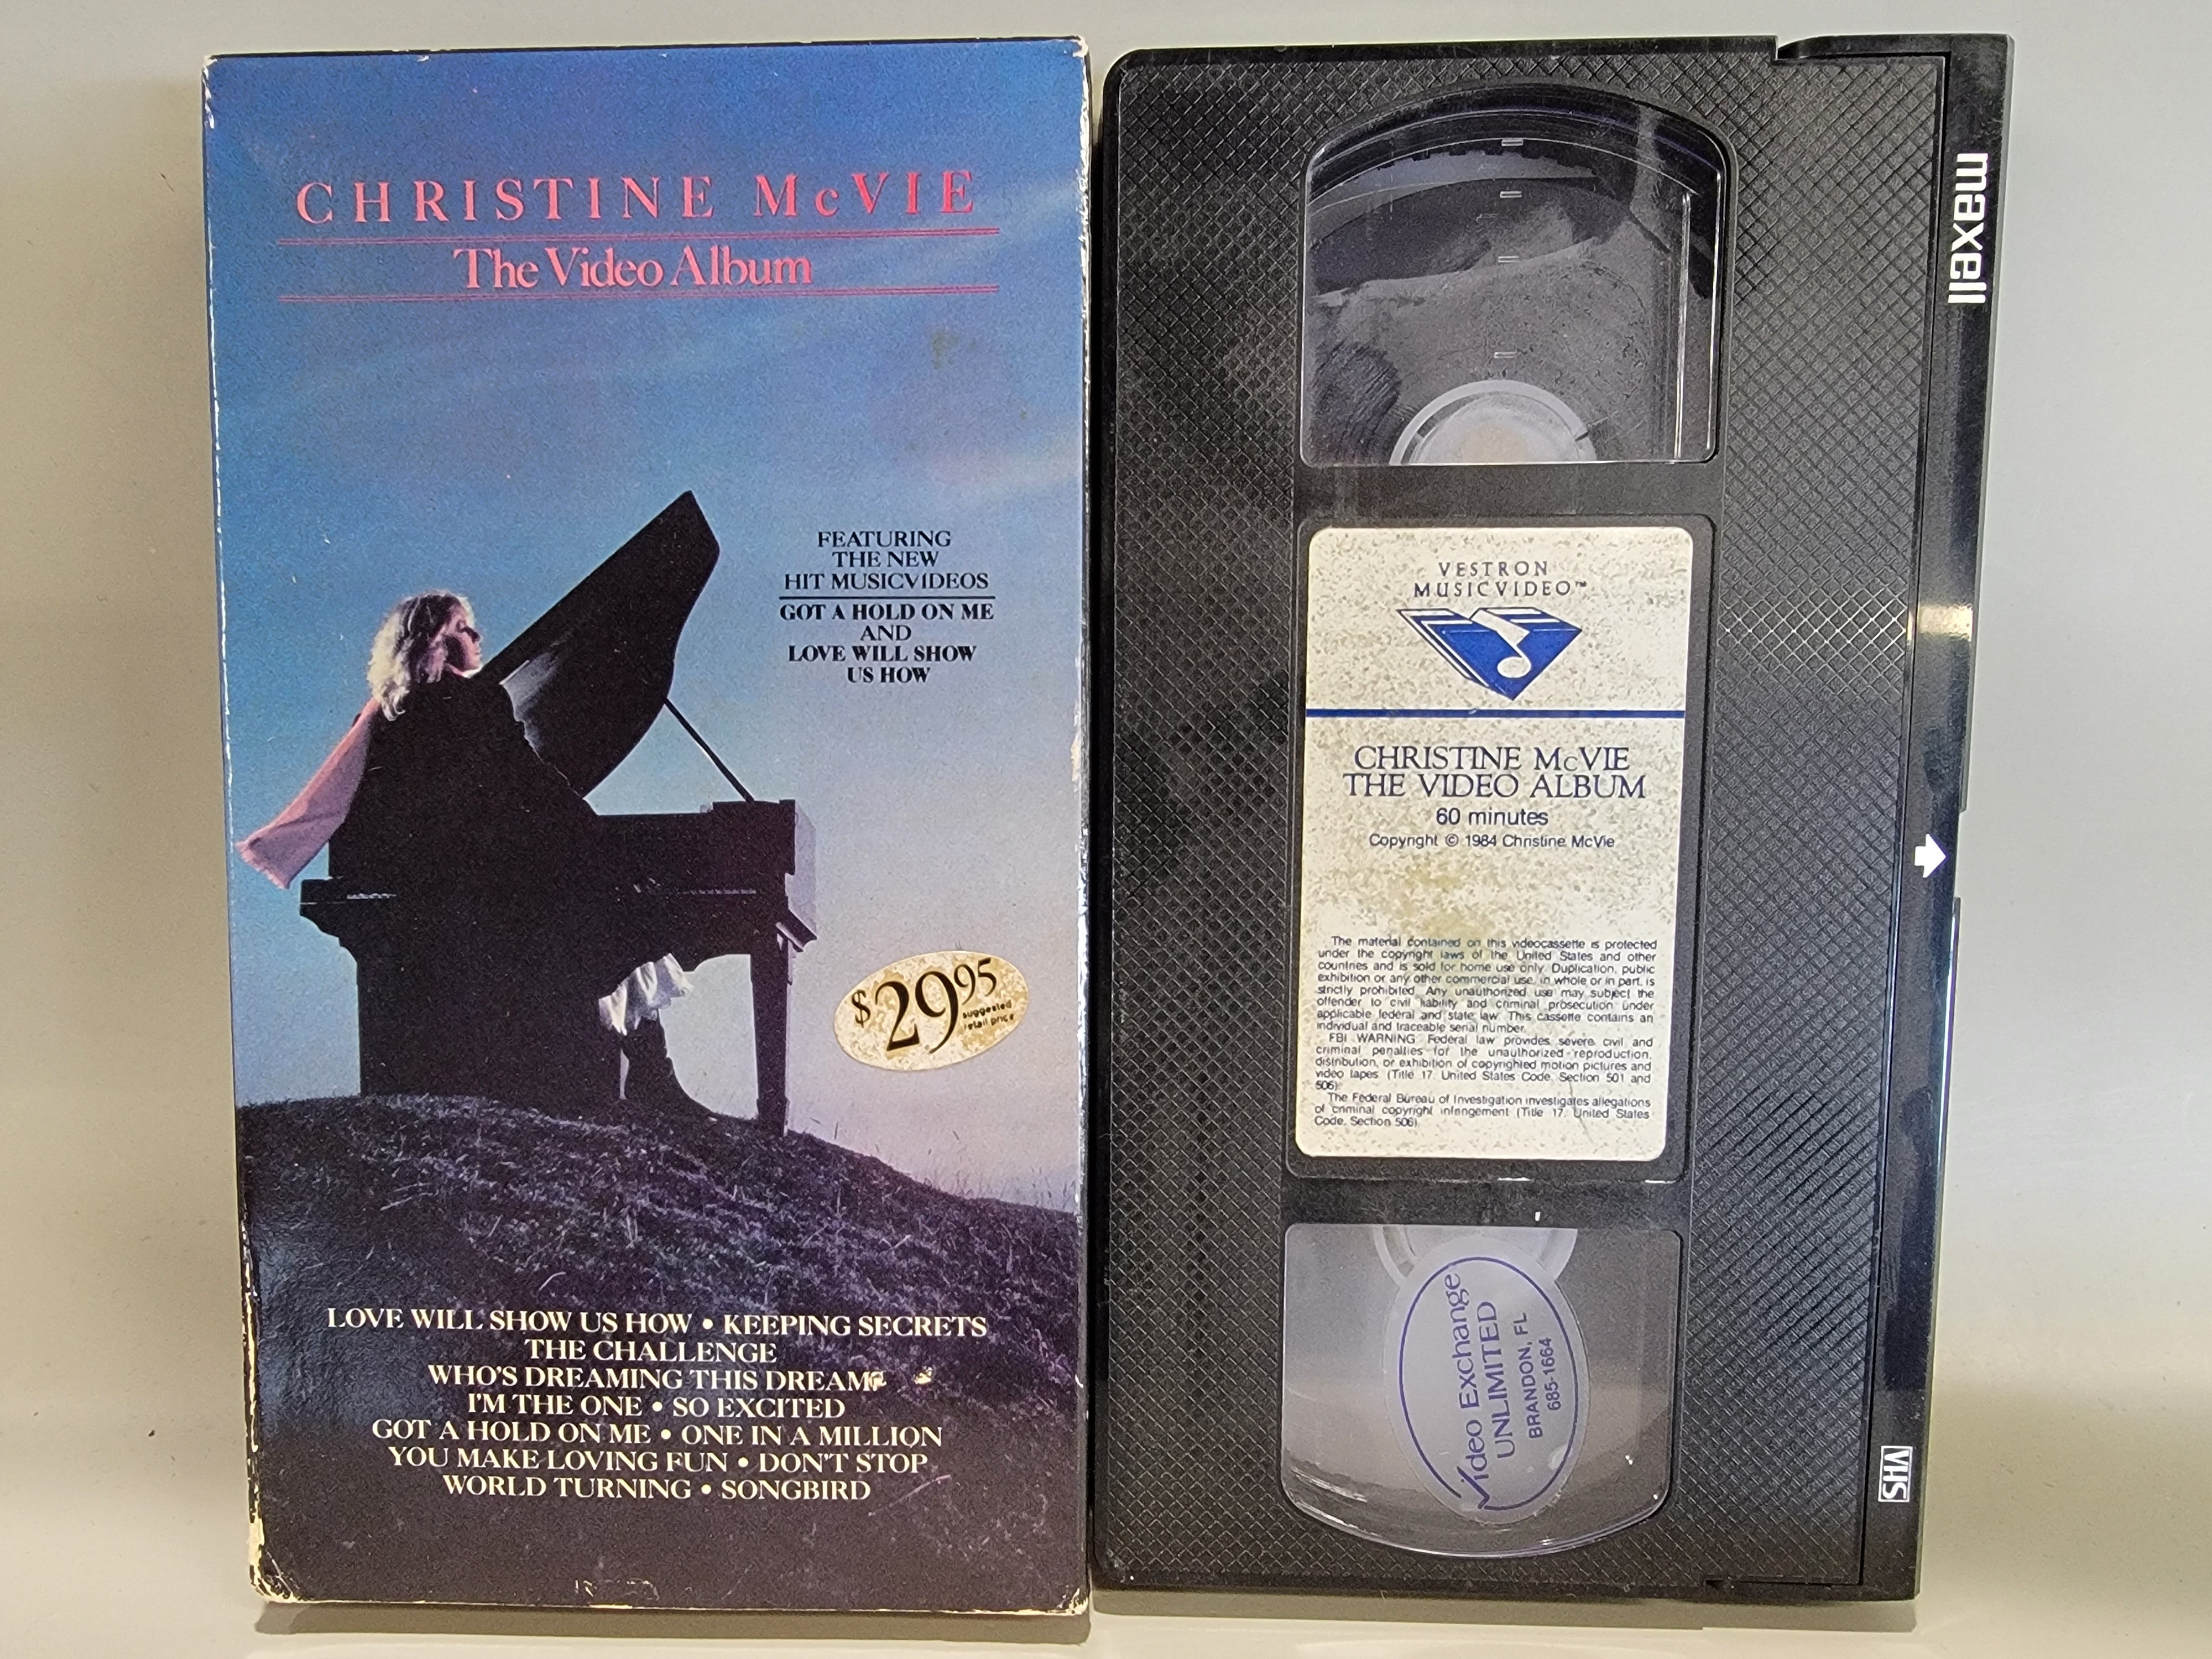 CHRISTINE MCVIE: THE VIDEO ALBUM VHS [USED]